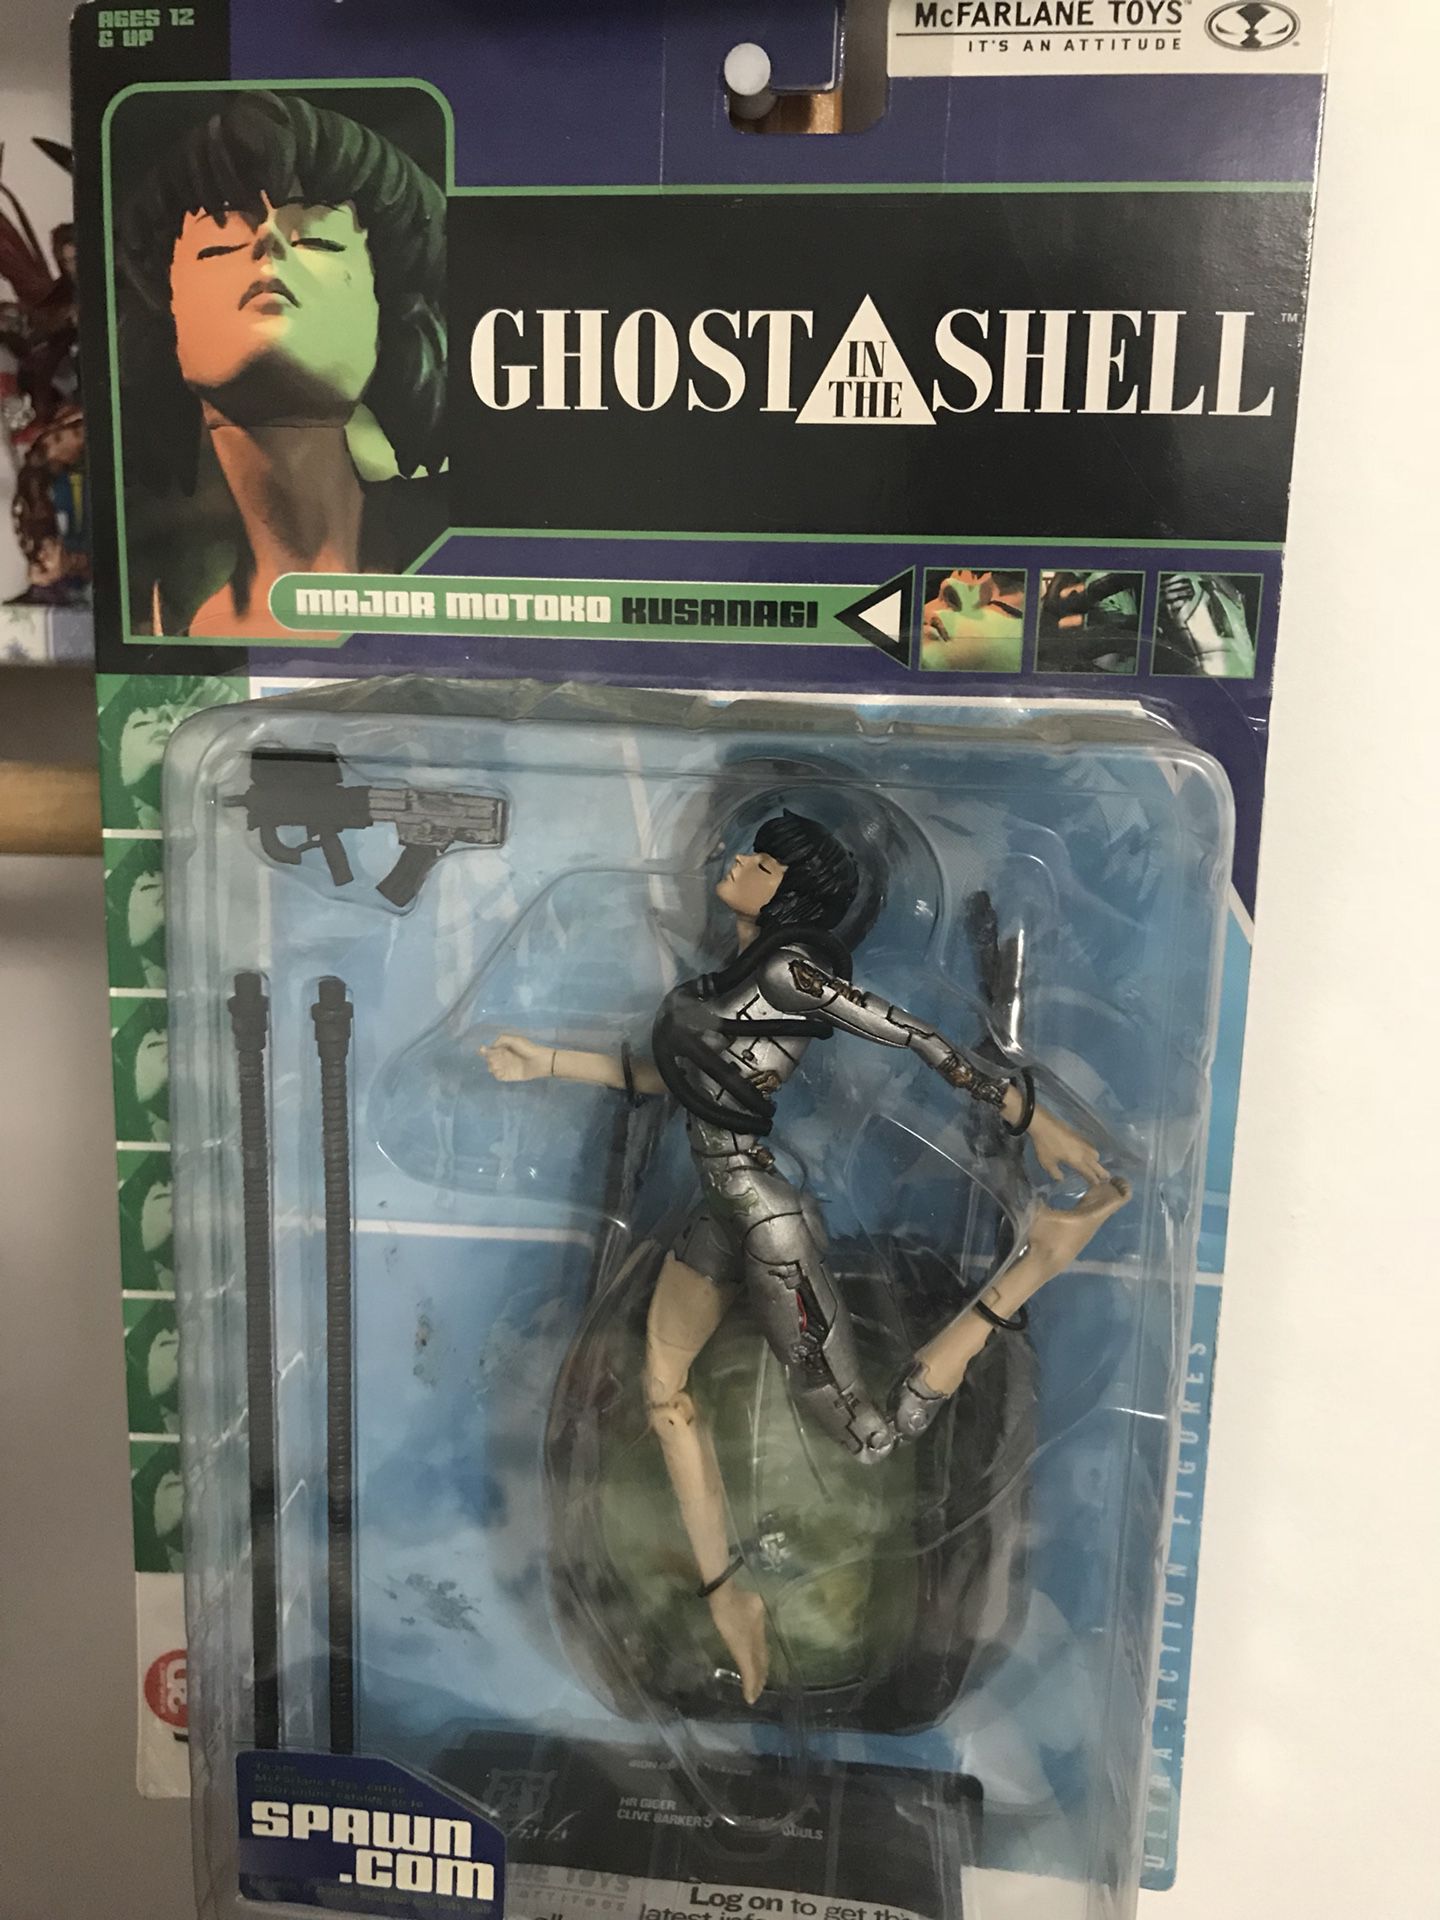 Ghost in the Shell Major Motoko Kusanagi Action Figure McFarlane